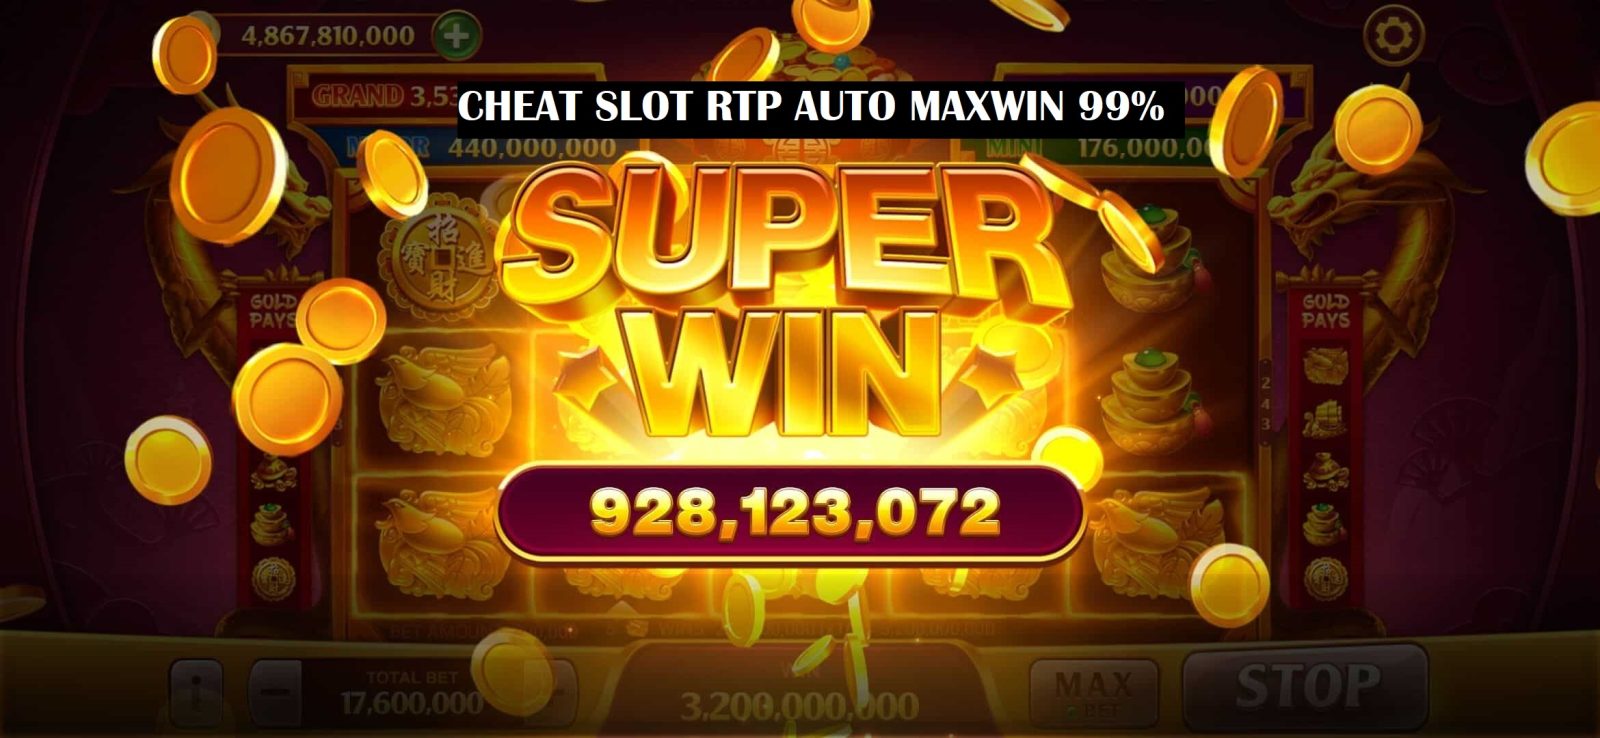 Cheat Slot Maxwin RTP Auto Up To 99%